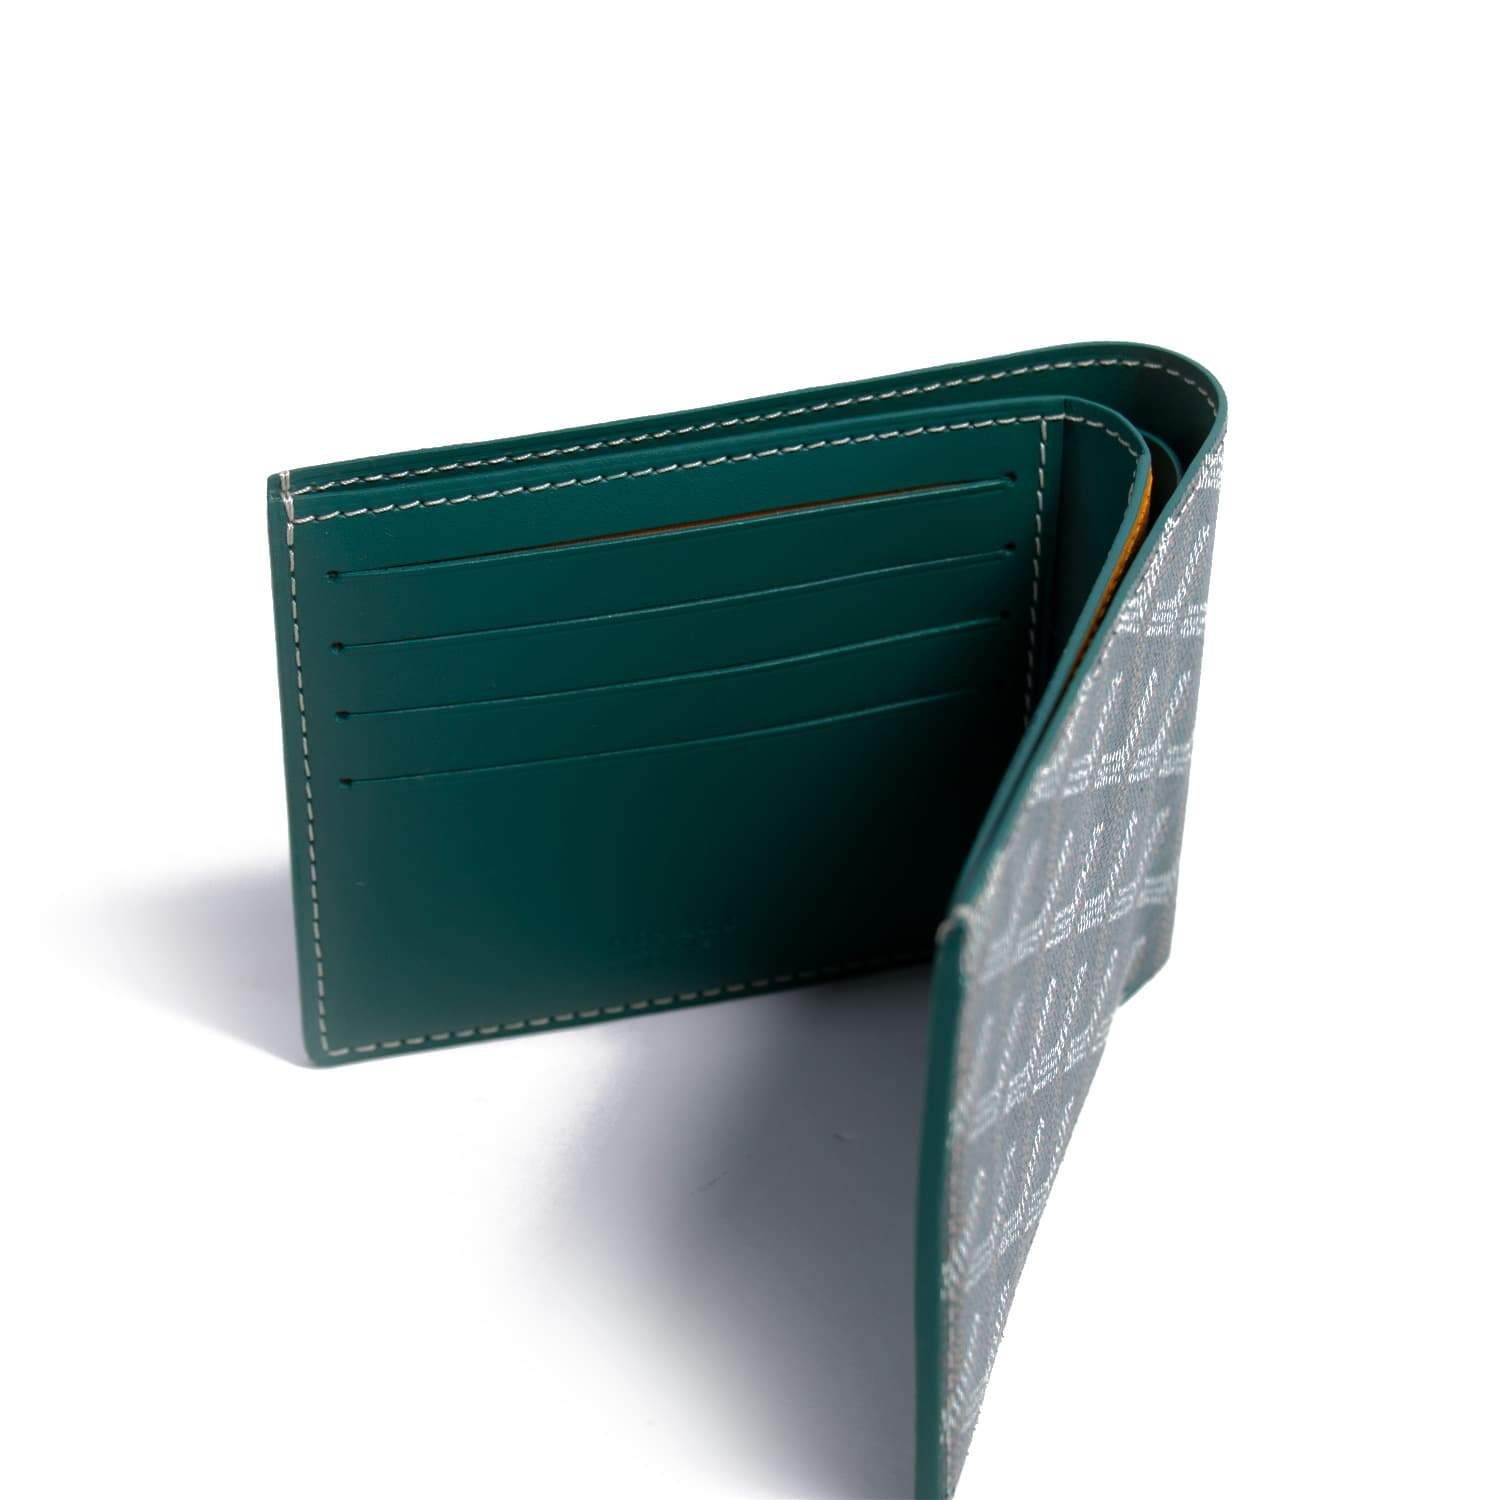 goyard green wallet